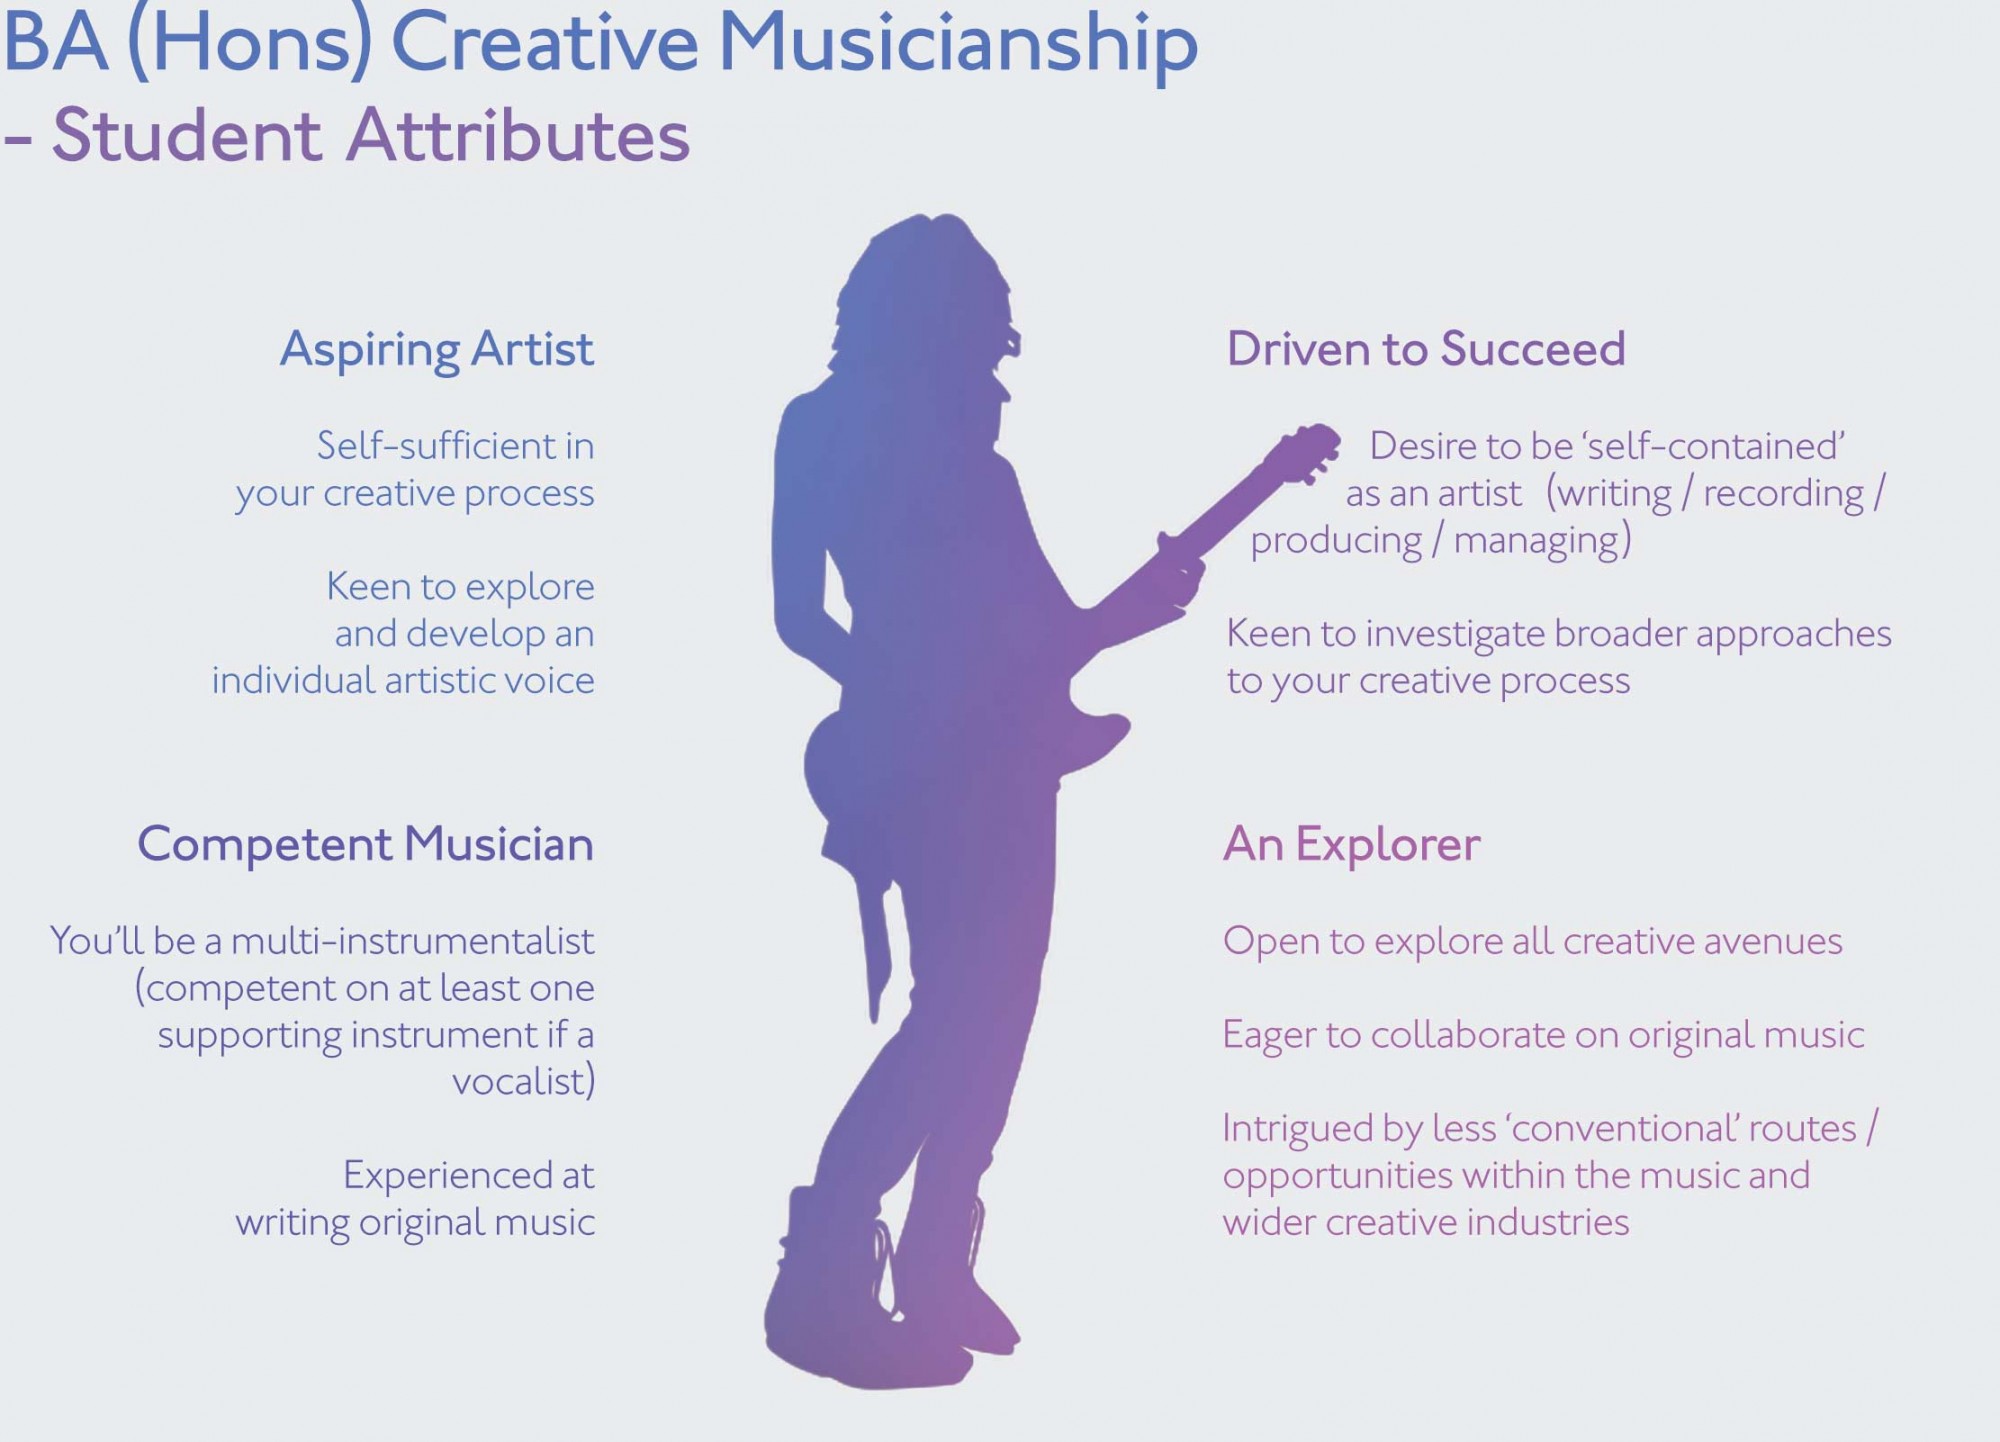 BA Creative Musicianship Student Attrributes graphic